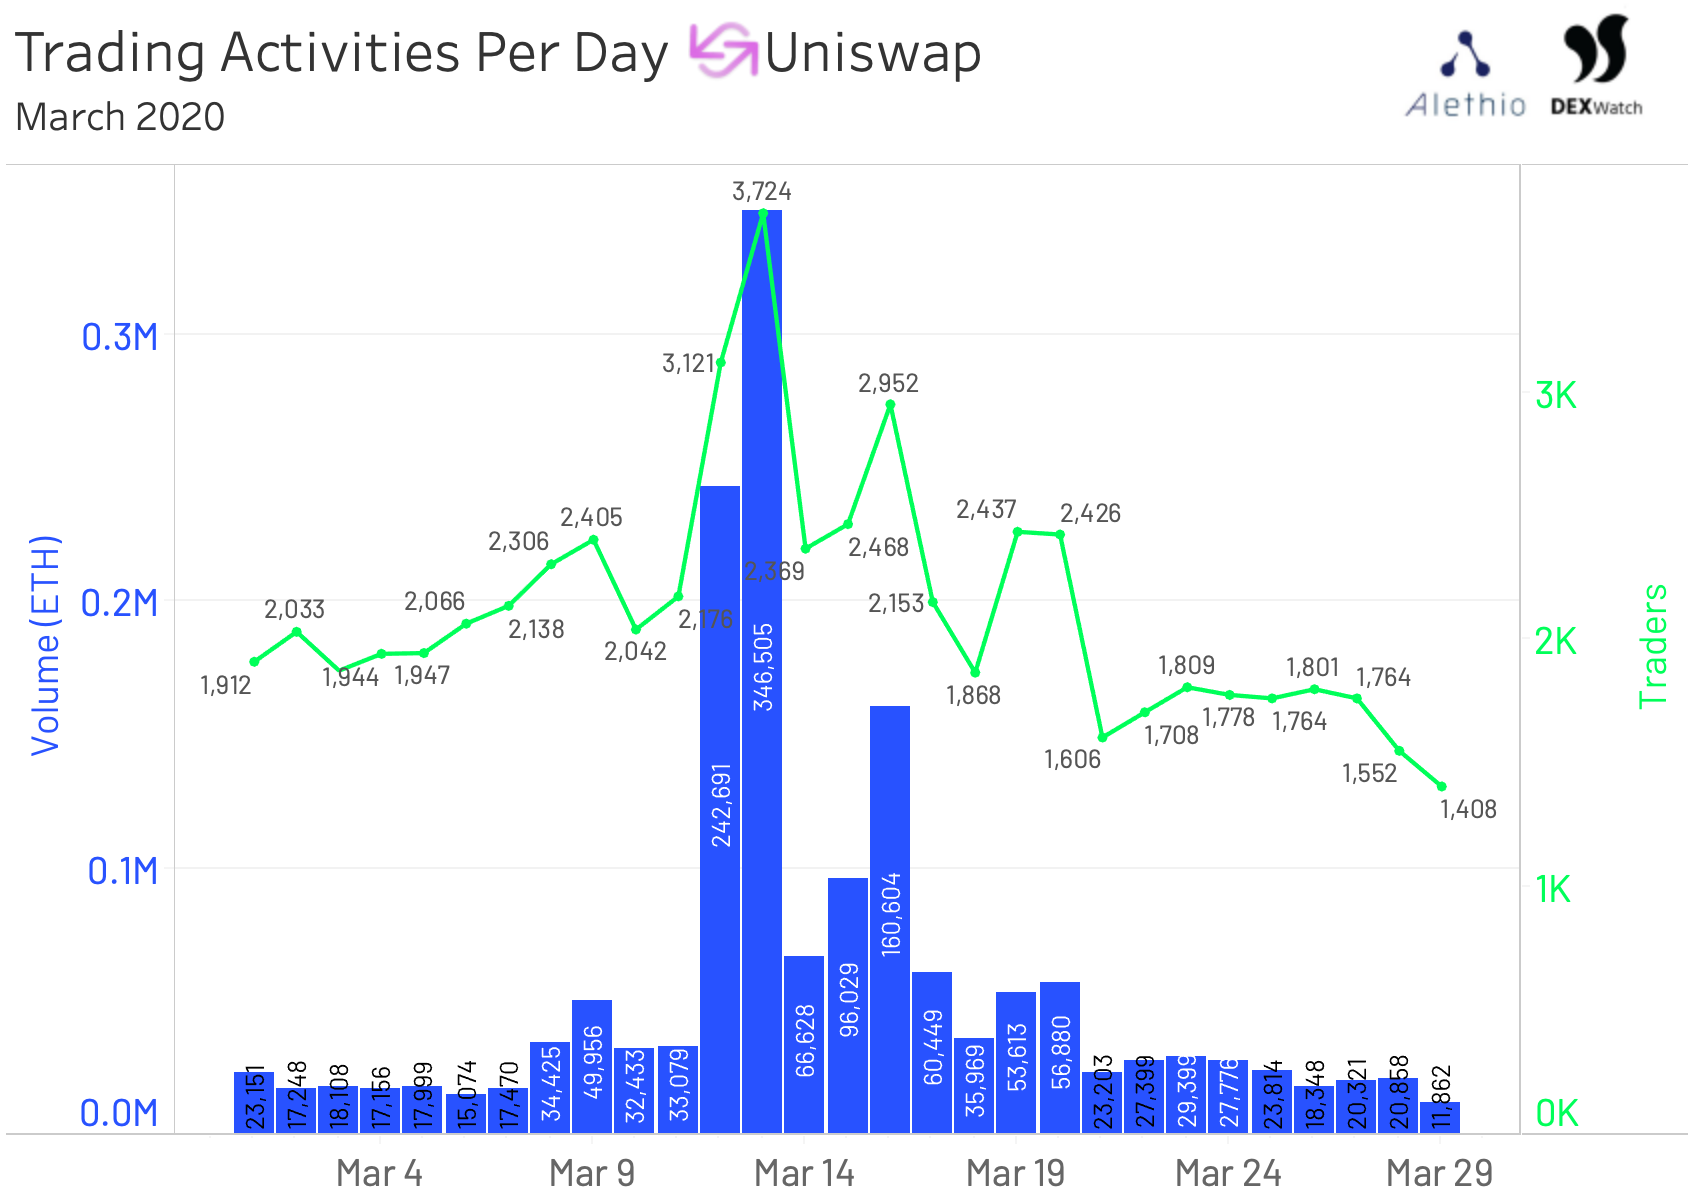 Trading Activities Per Day on Uniswap